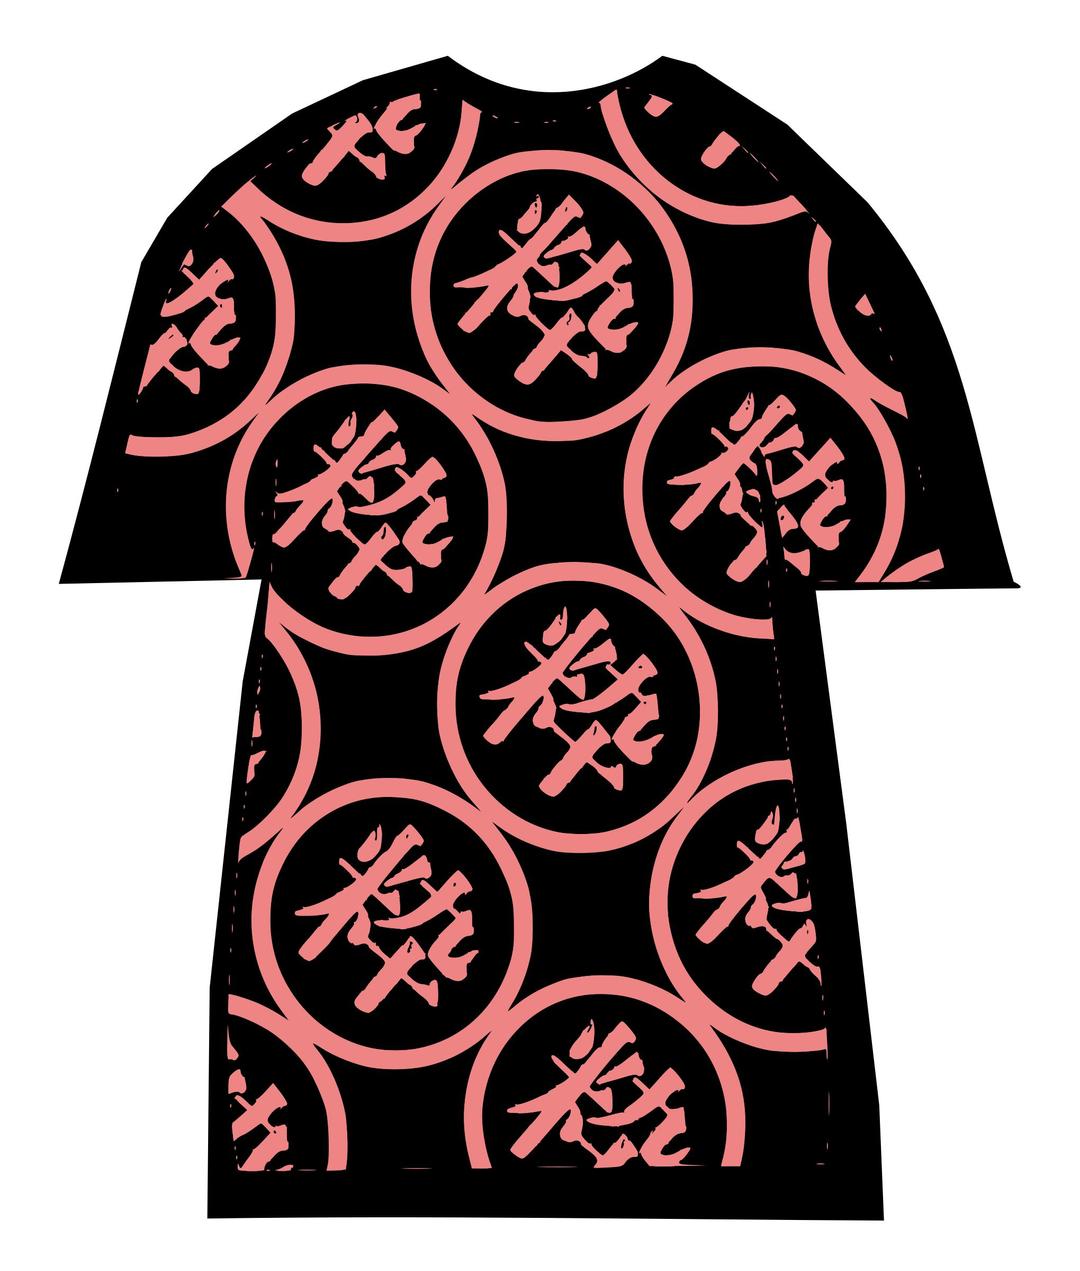 Tshirt-kanji png transparent